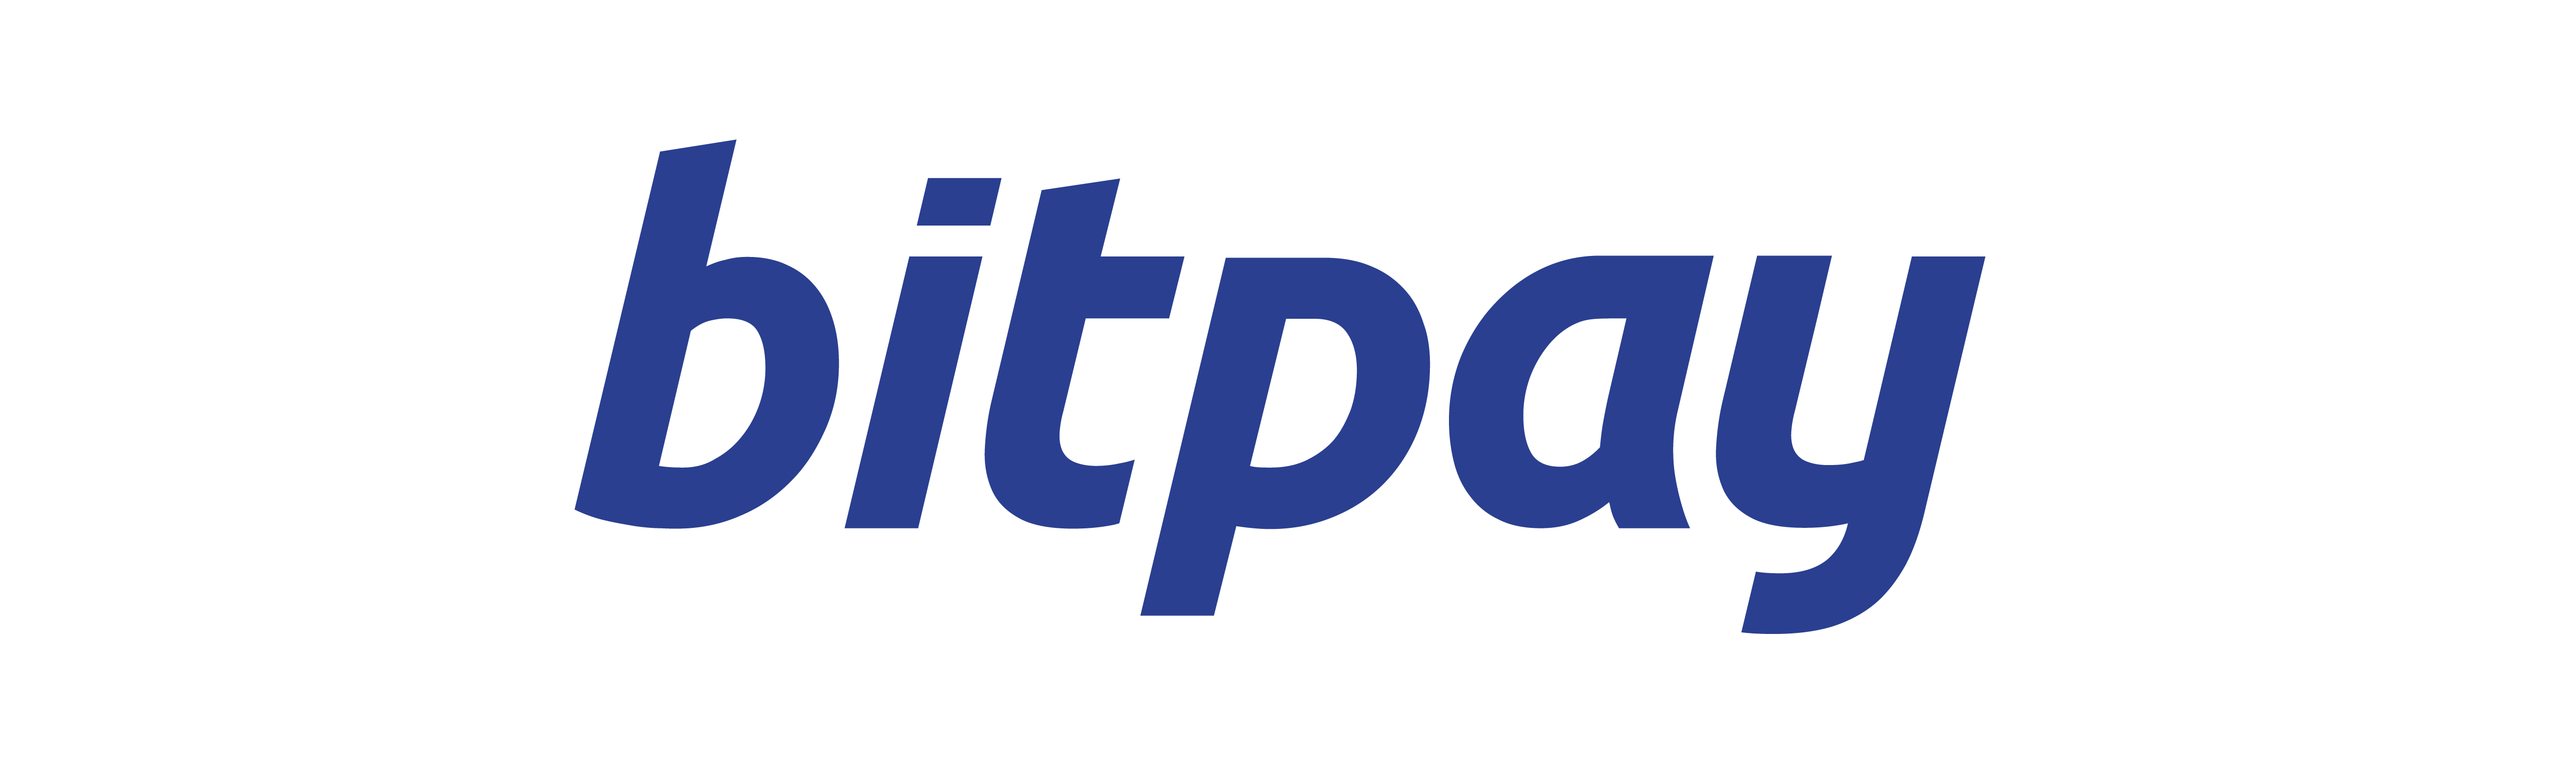 BitPay Logo-png-1200px